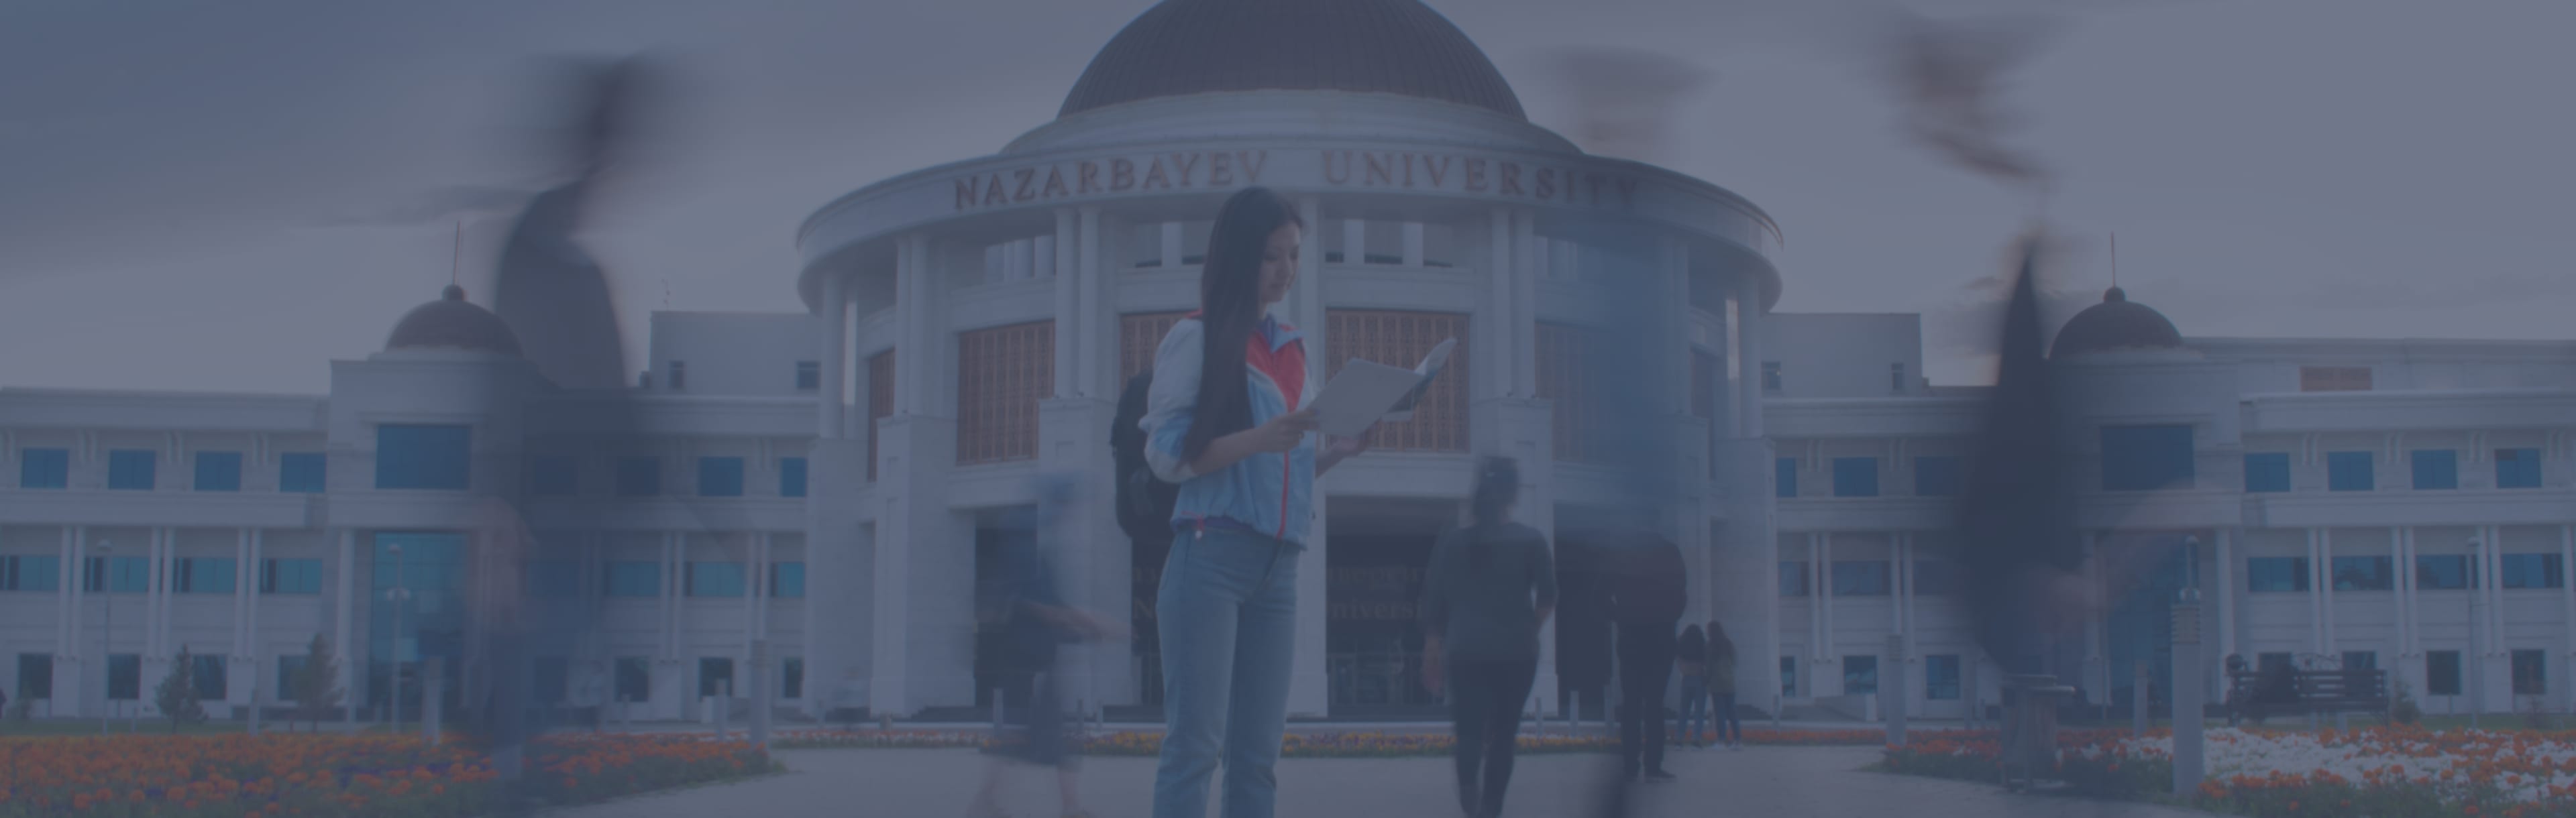 Nazarbayev University 博士在欧亚研究计划中